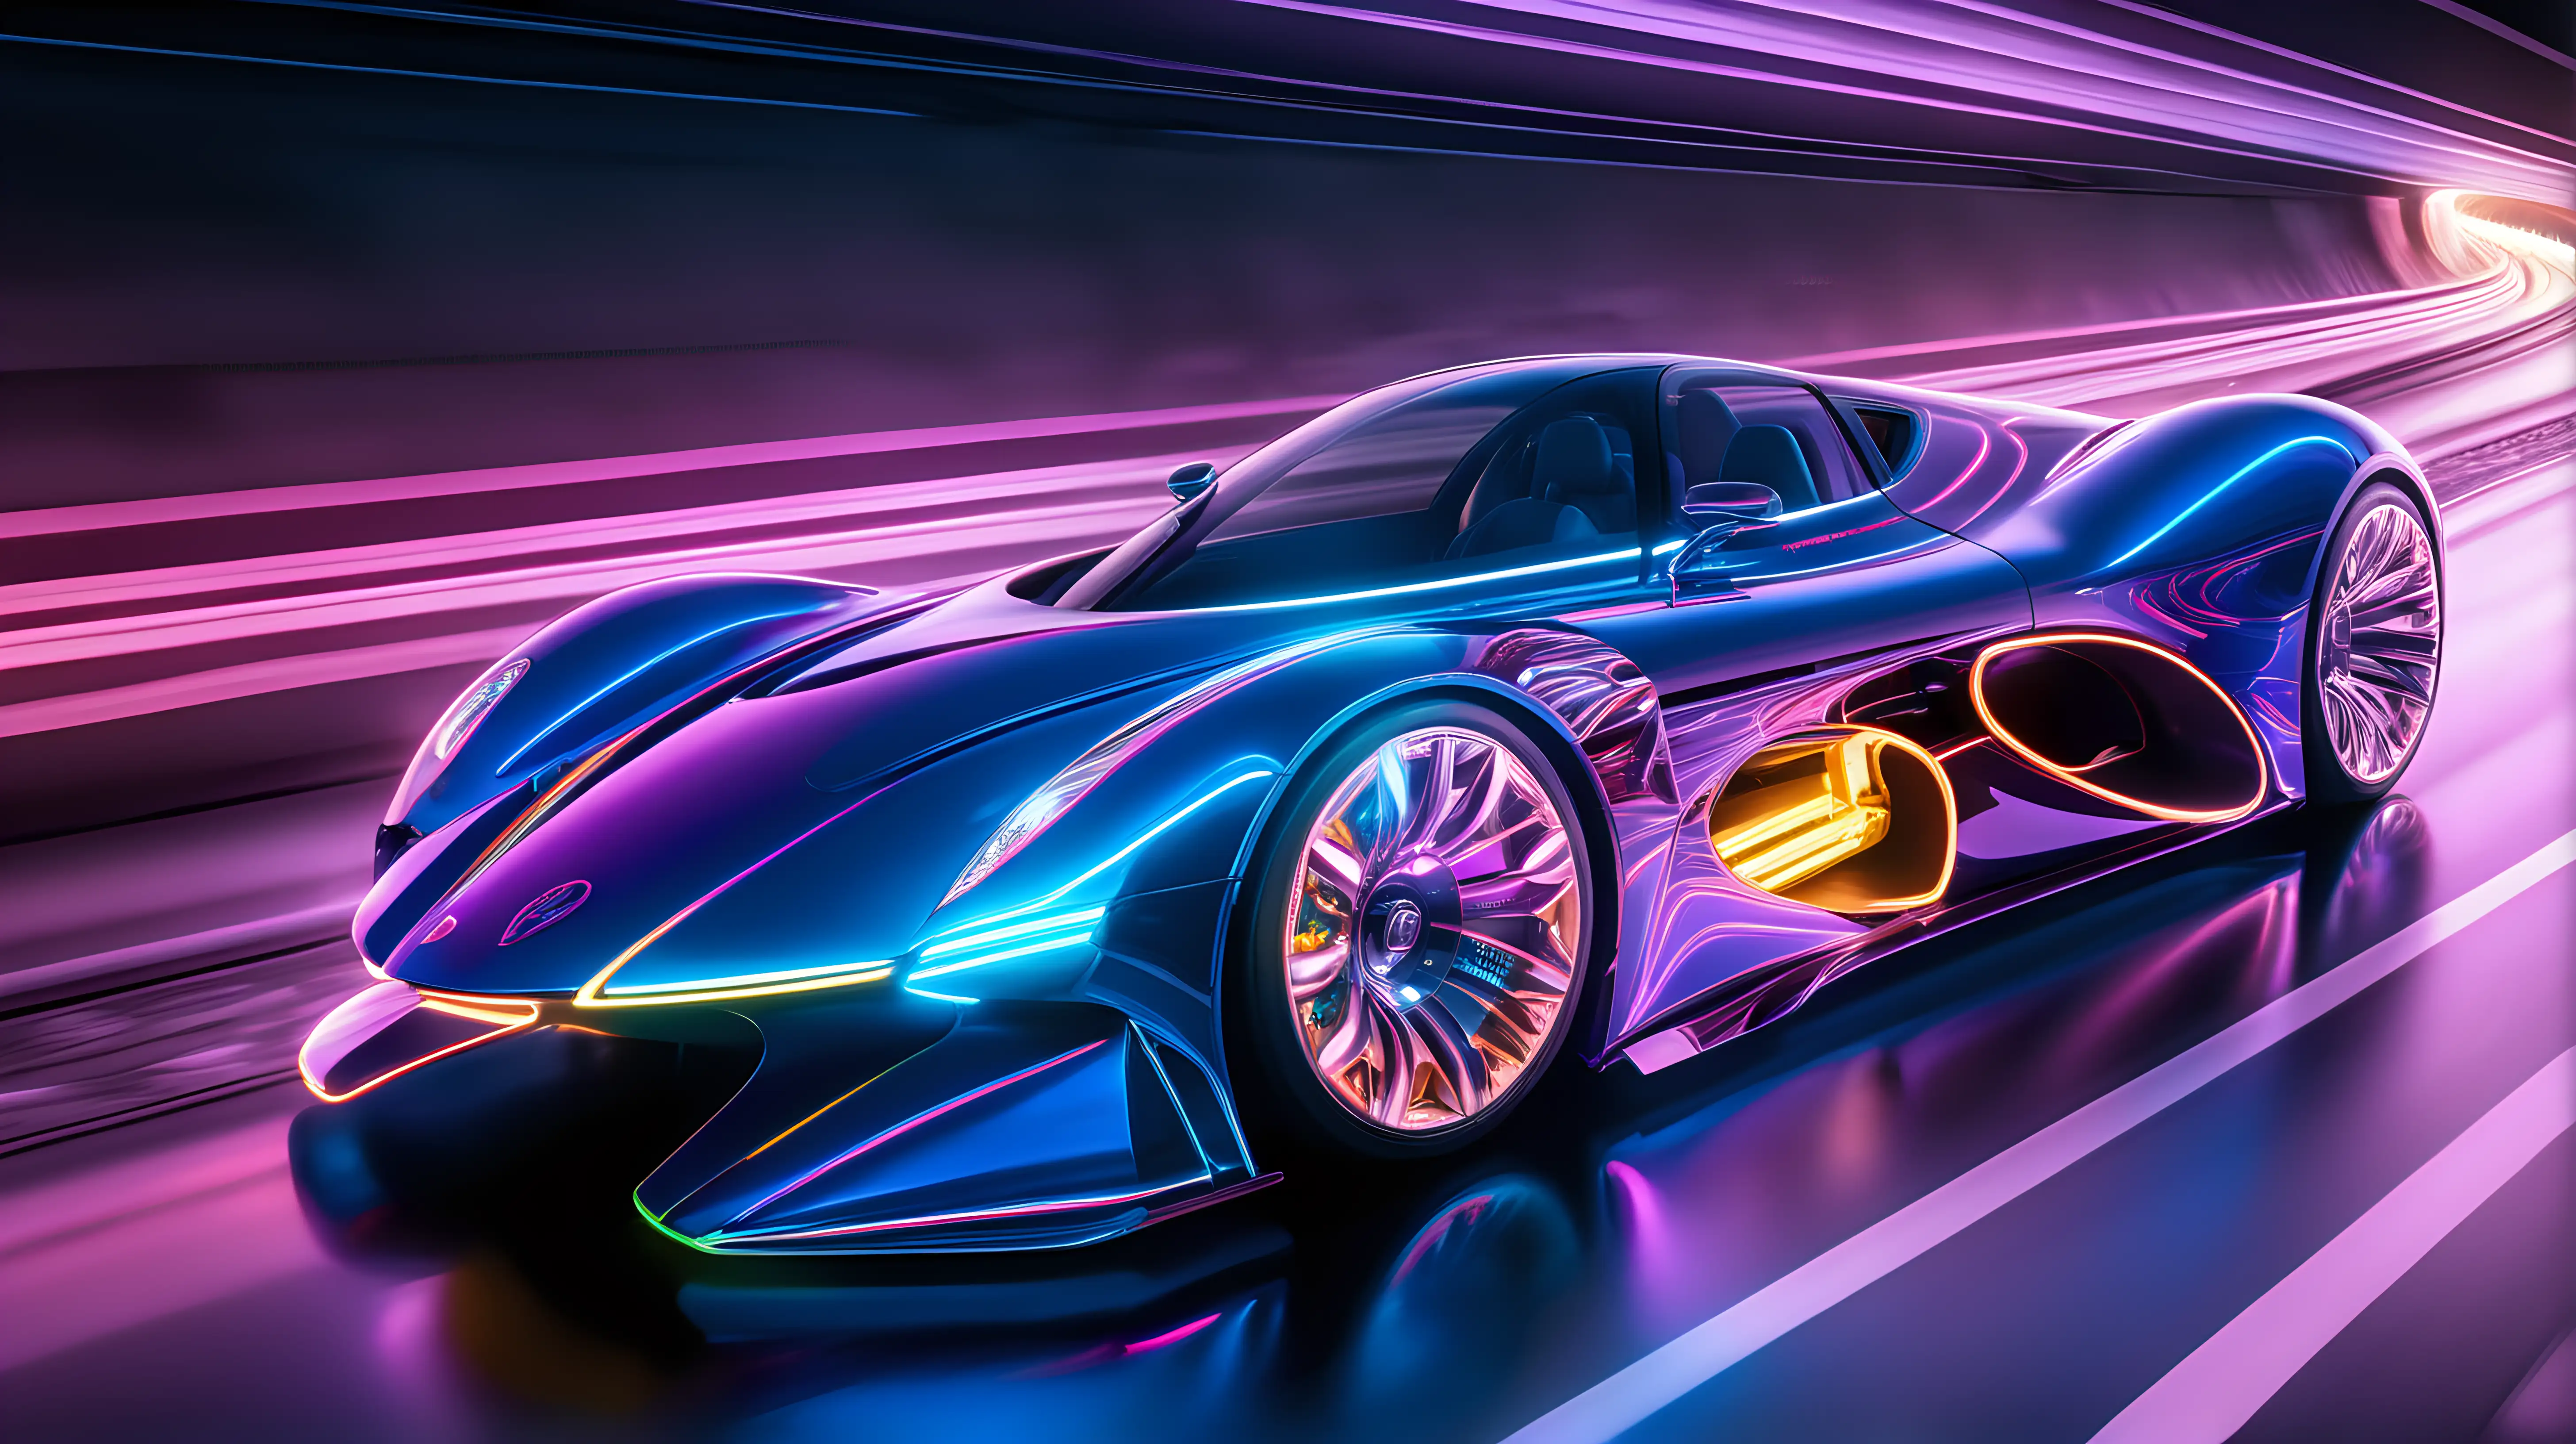 Futuristic Car Speeding Through NeonLit Tunnel